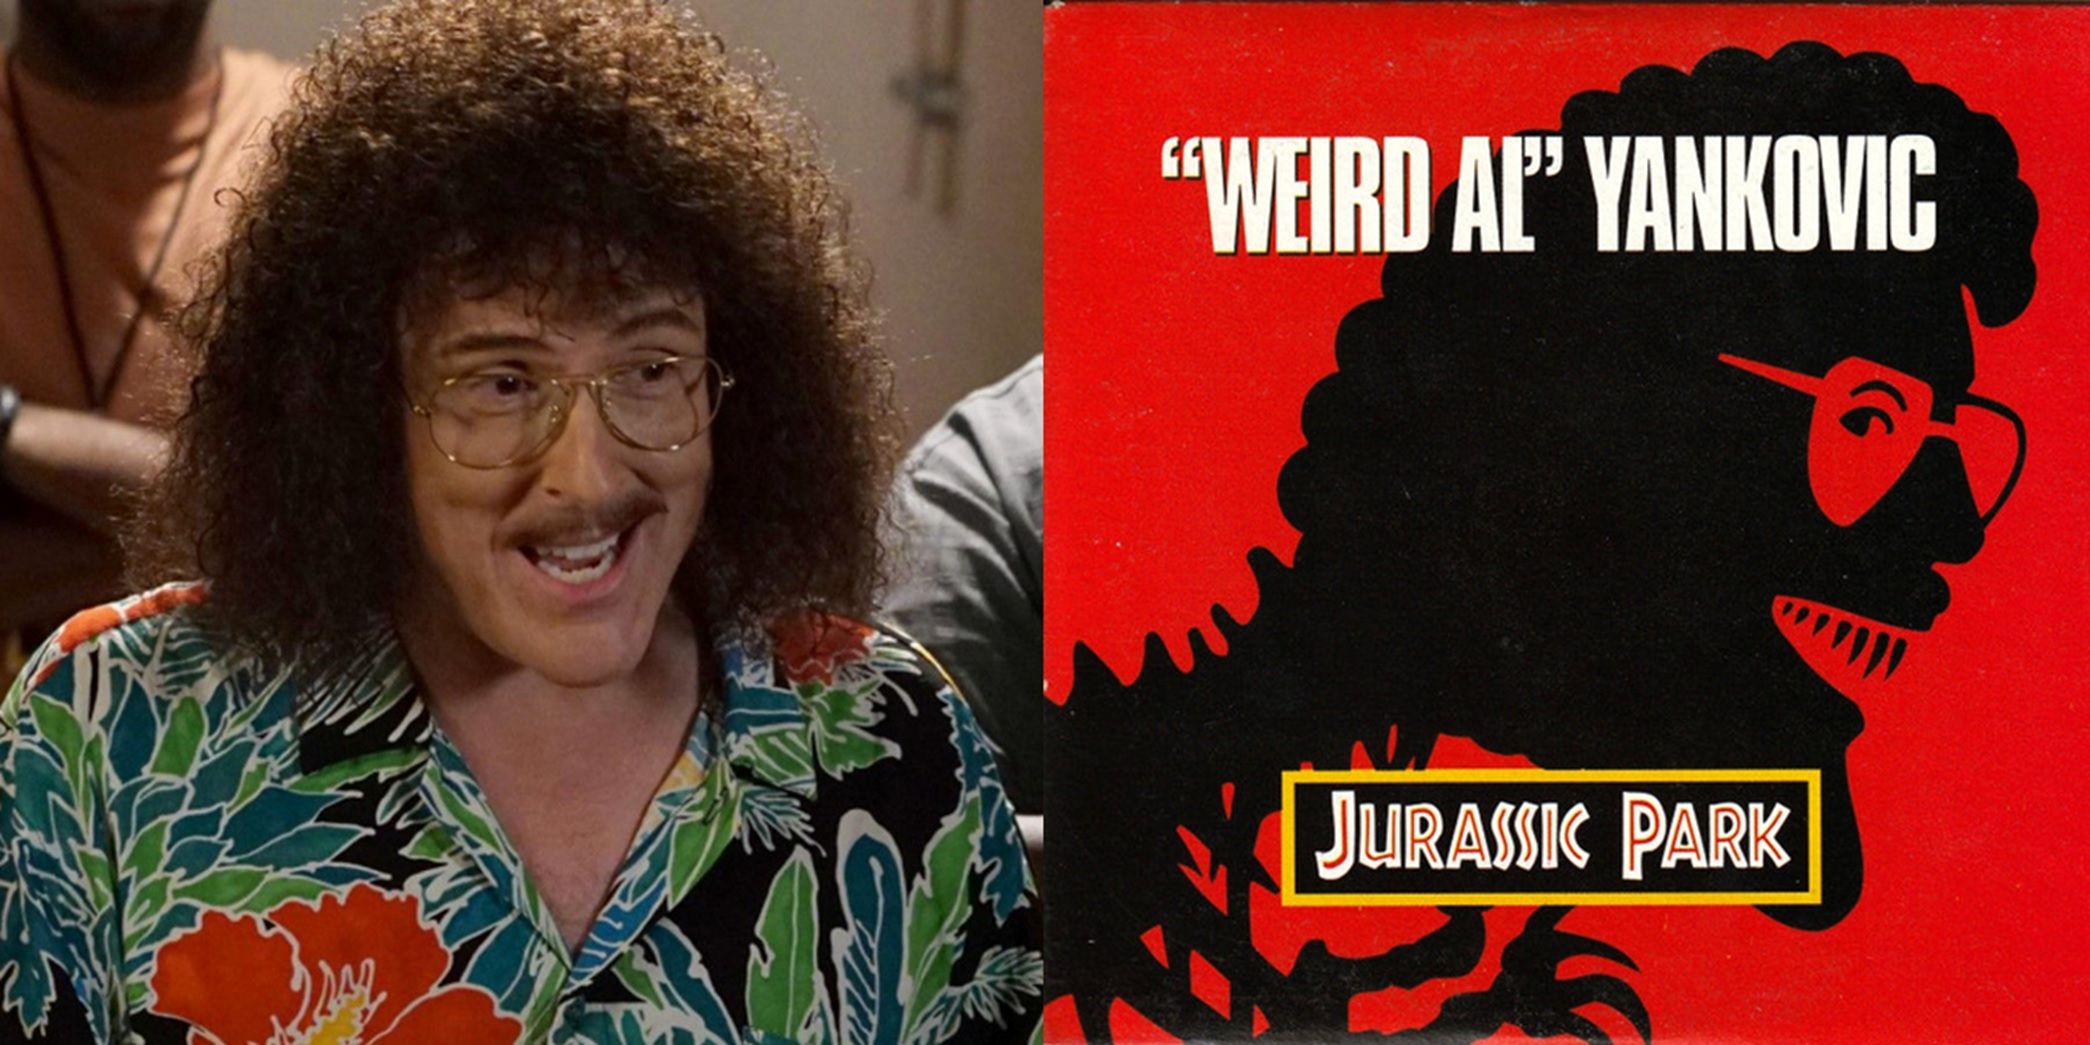 Split image of Weird Al Yankovic and his Jurassic Park single